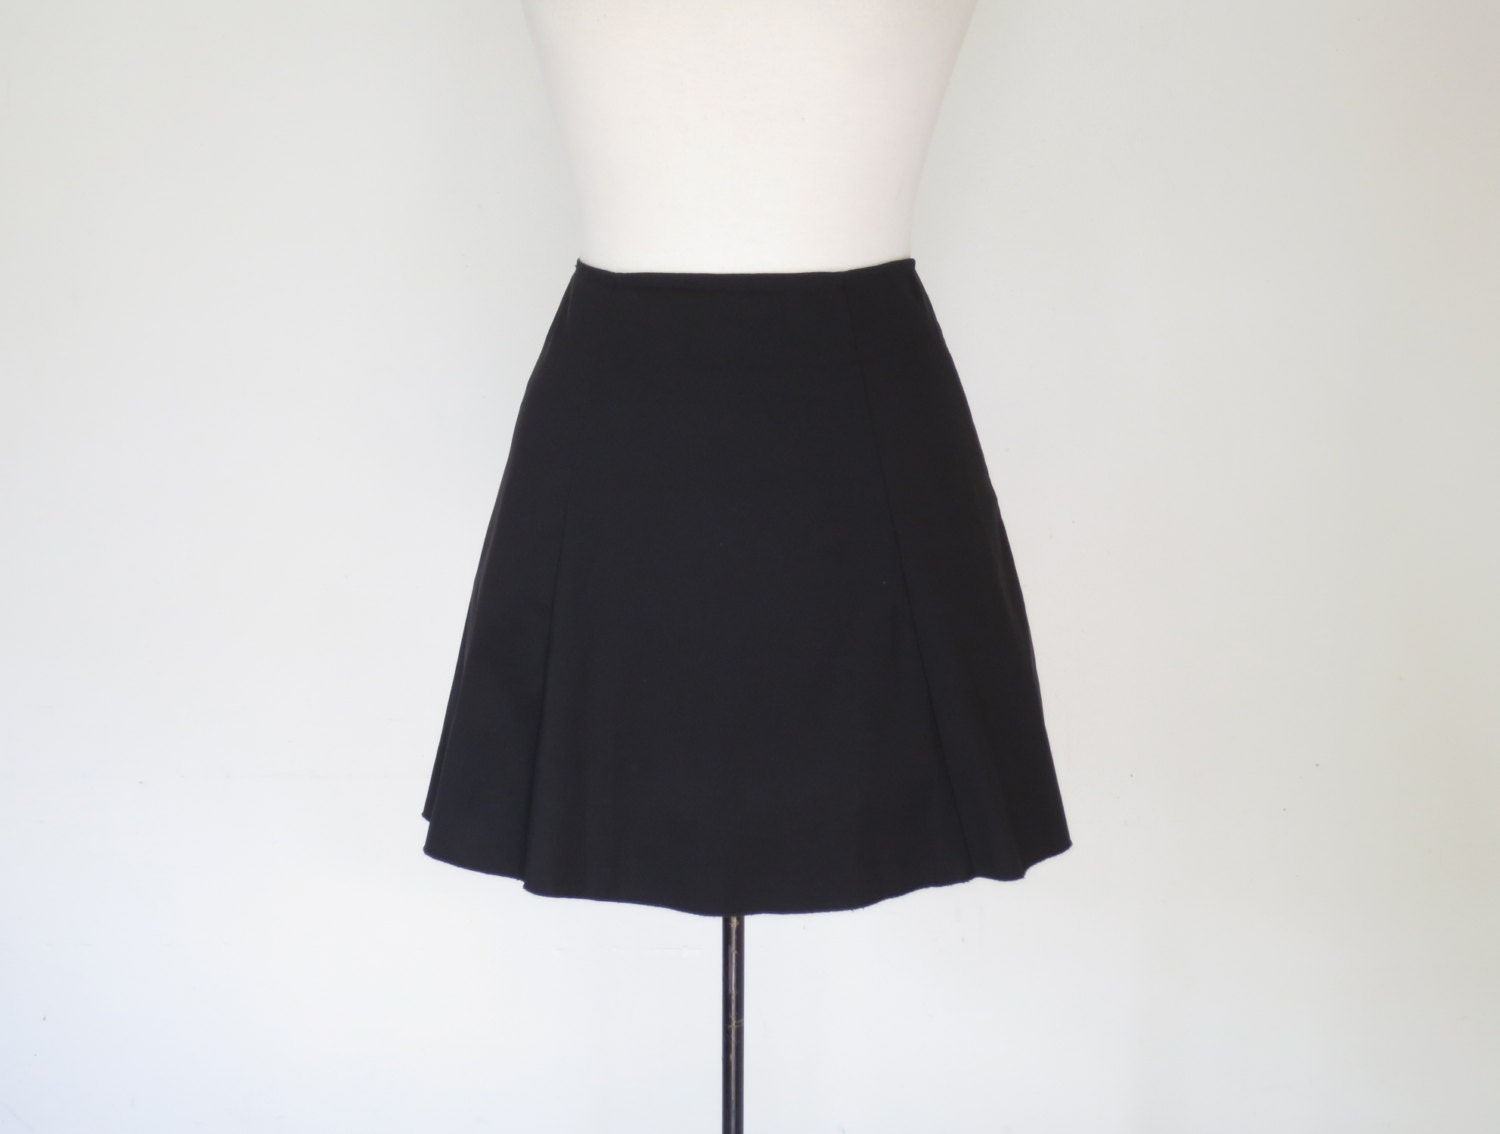 JAWBREAKER // black poofy 90s mini skirt with lace frills